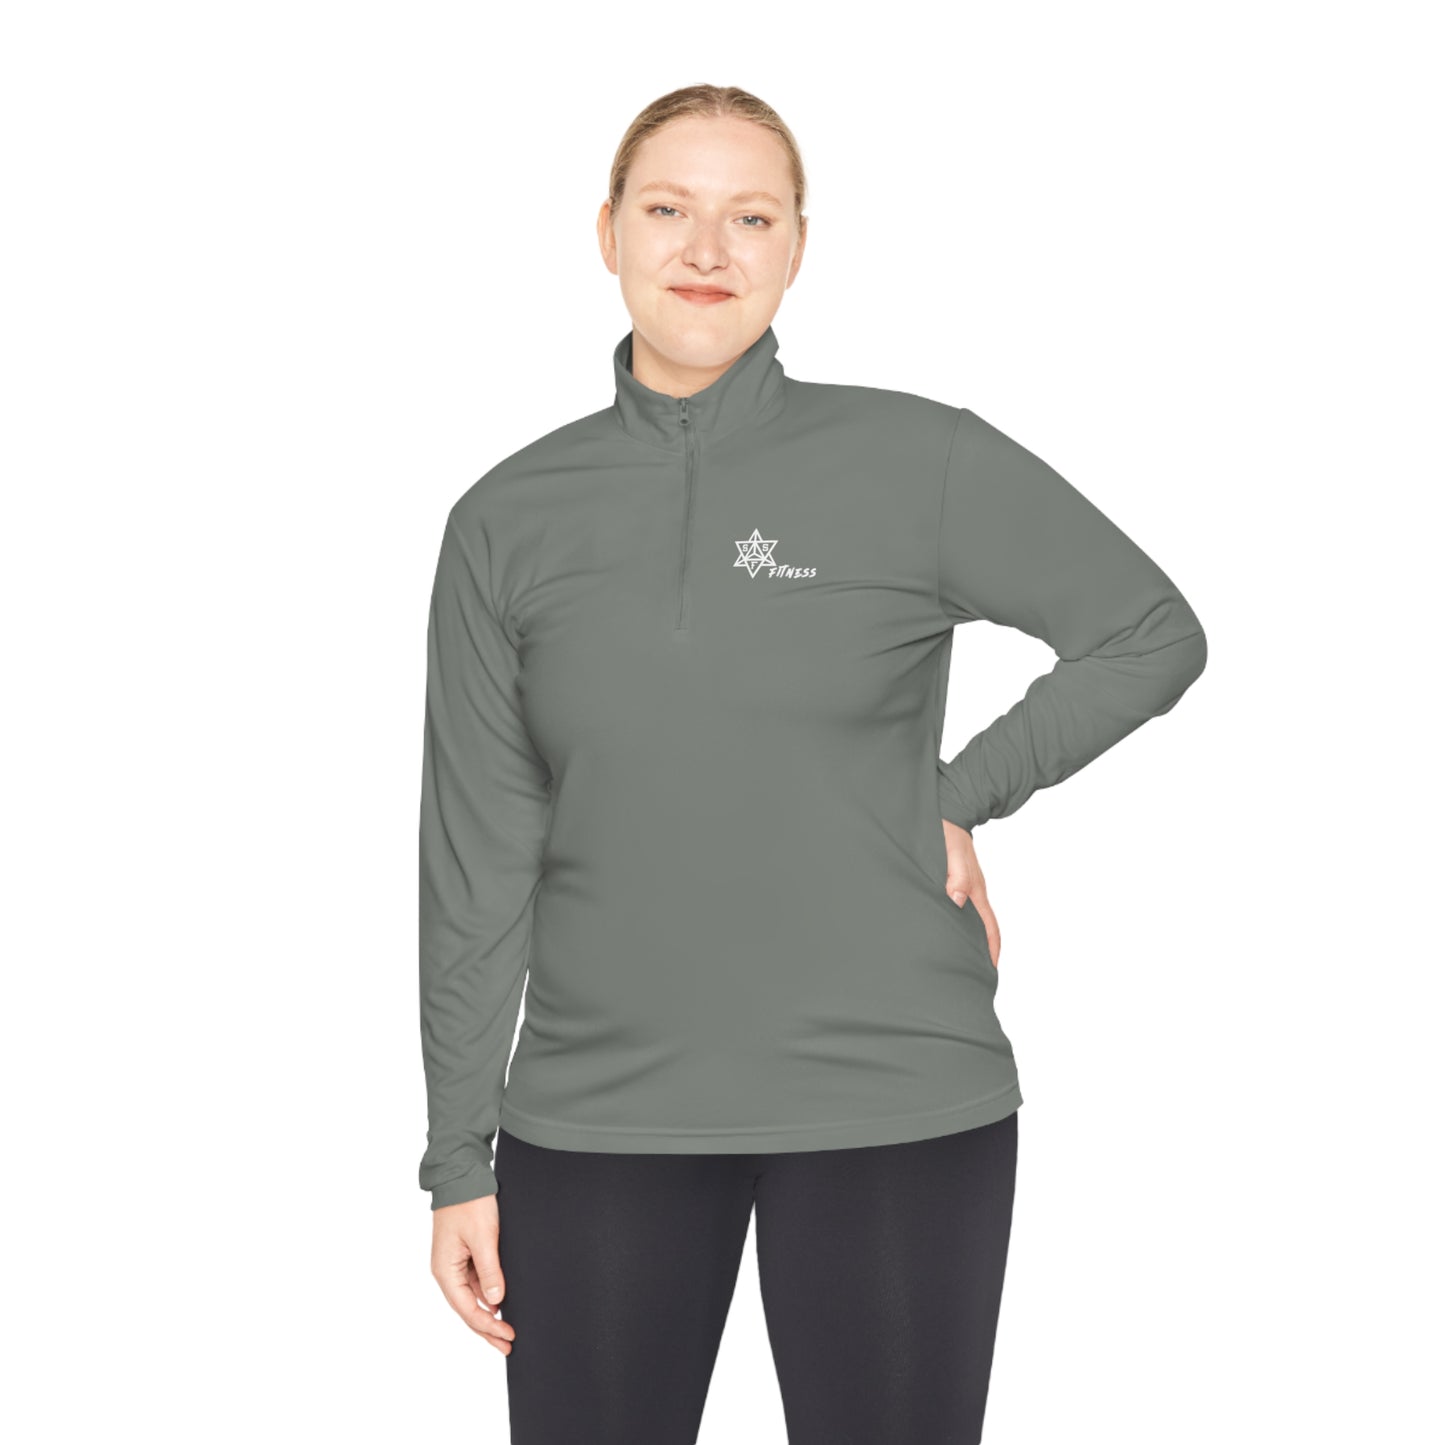 SSF Fitness Unisex Quarter-Zip Pullover